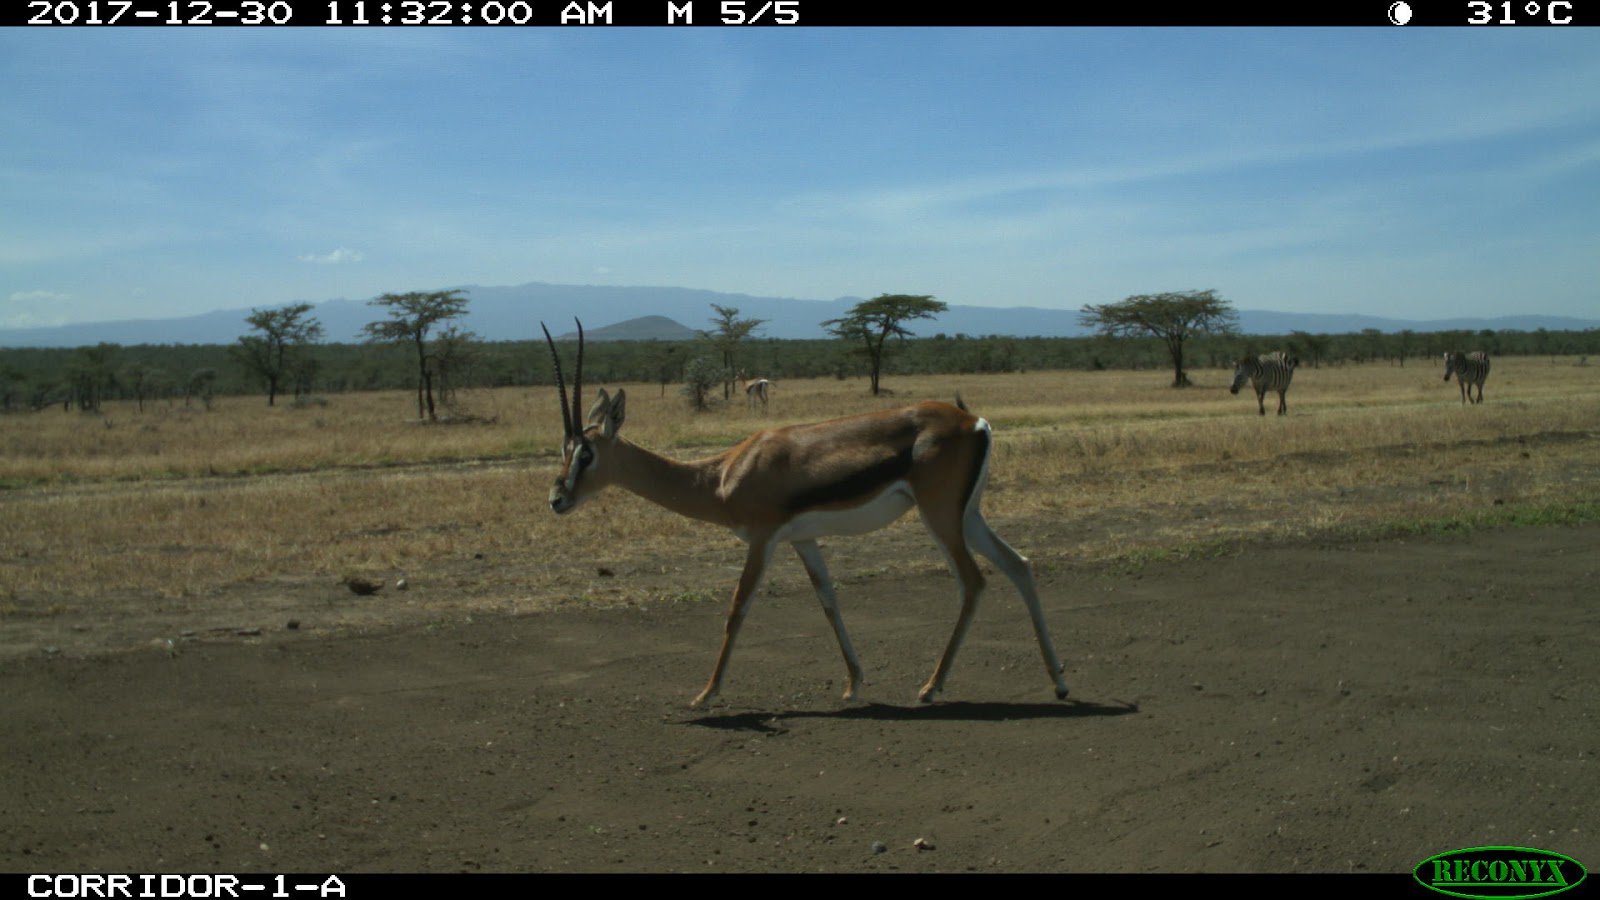 Grant’s gazelle (human label) with zebra in the background (Image credit: Ol Pejeta Conservancy).